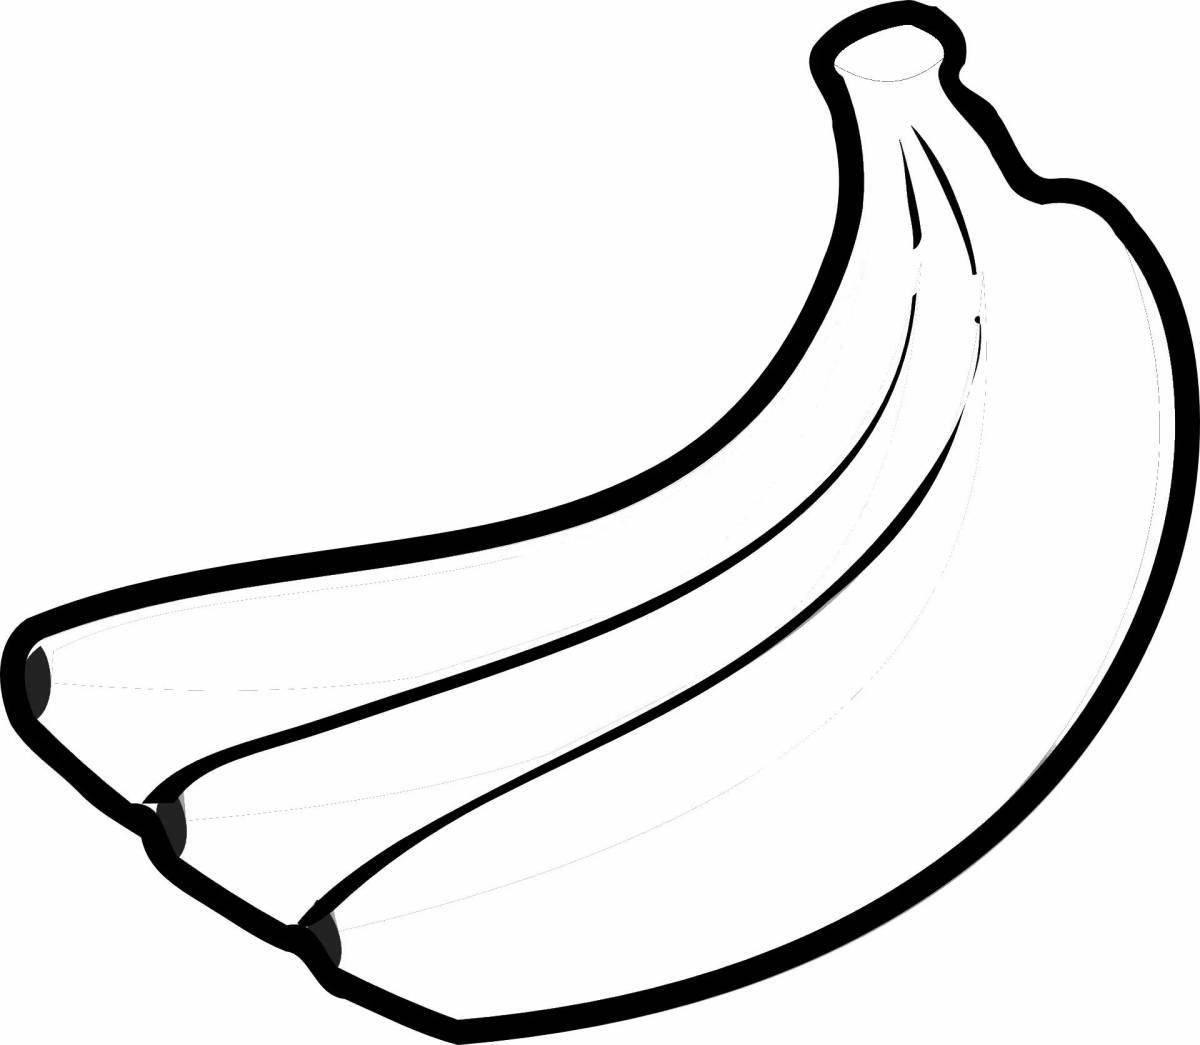 Animated banana drawing